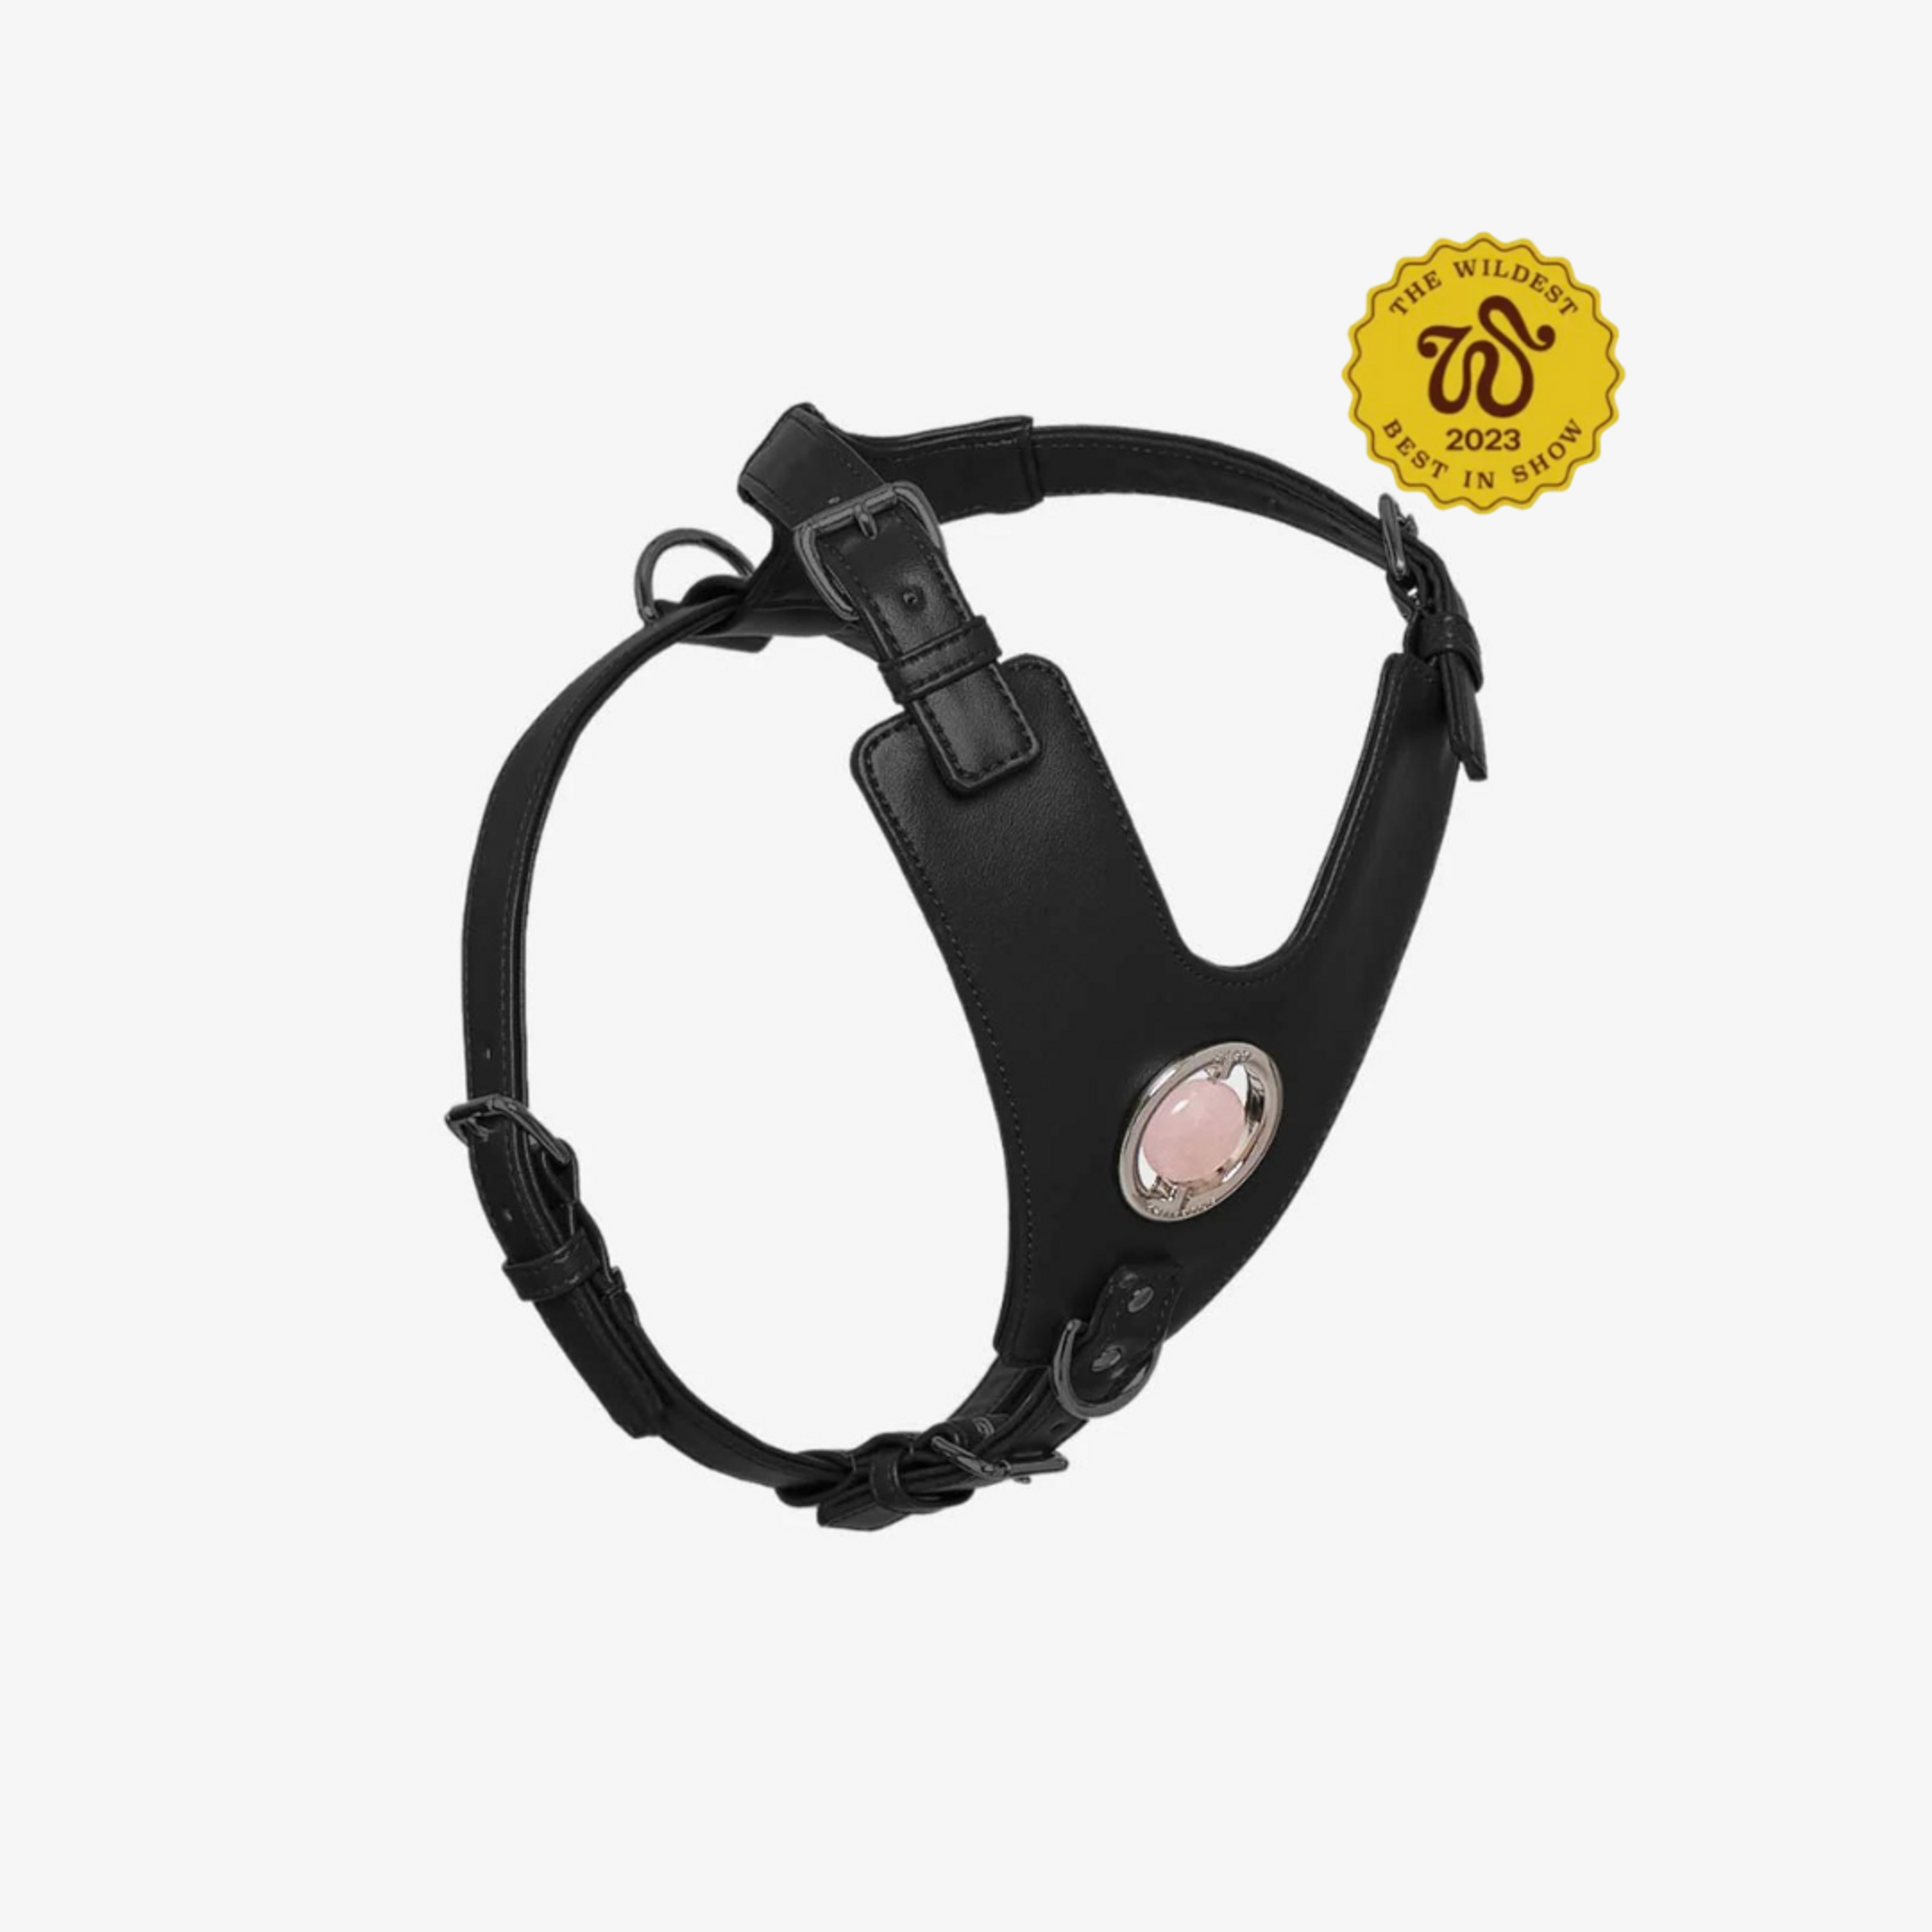 Good Vibration Dog Harness - Black